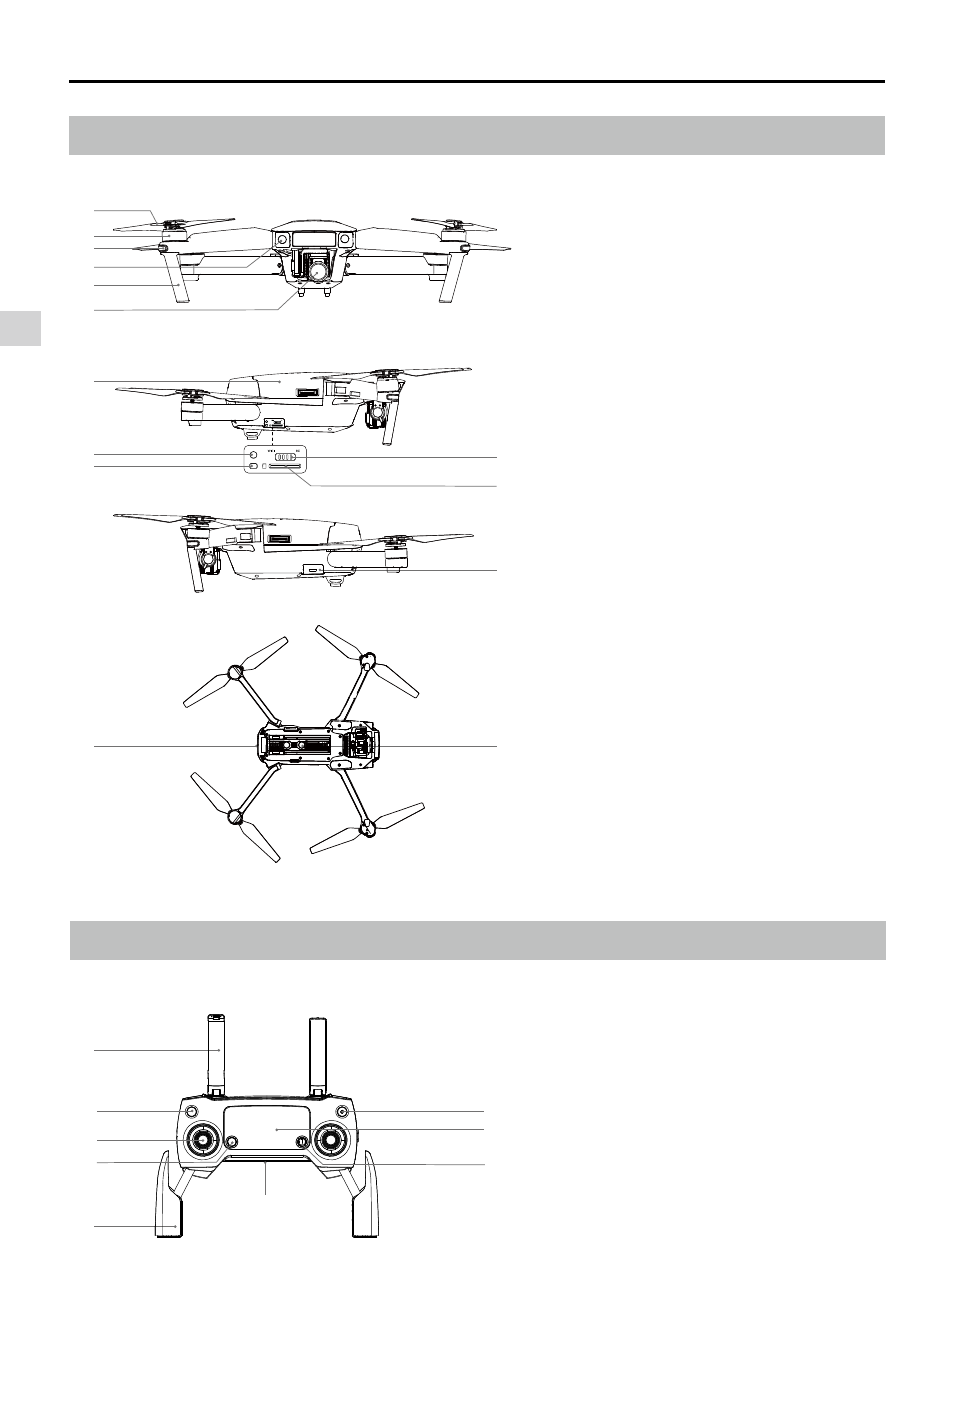 Aircraft diagram, Remote controller diagram, Aircraft diagram remote  controller diagram | DJI Mavic Pro User Manual | Page 8 / 60